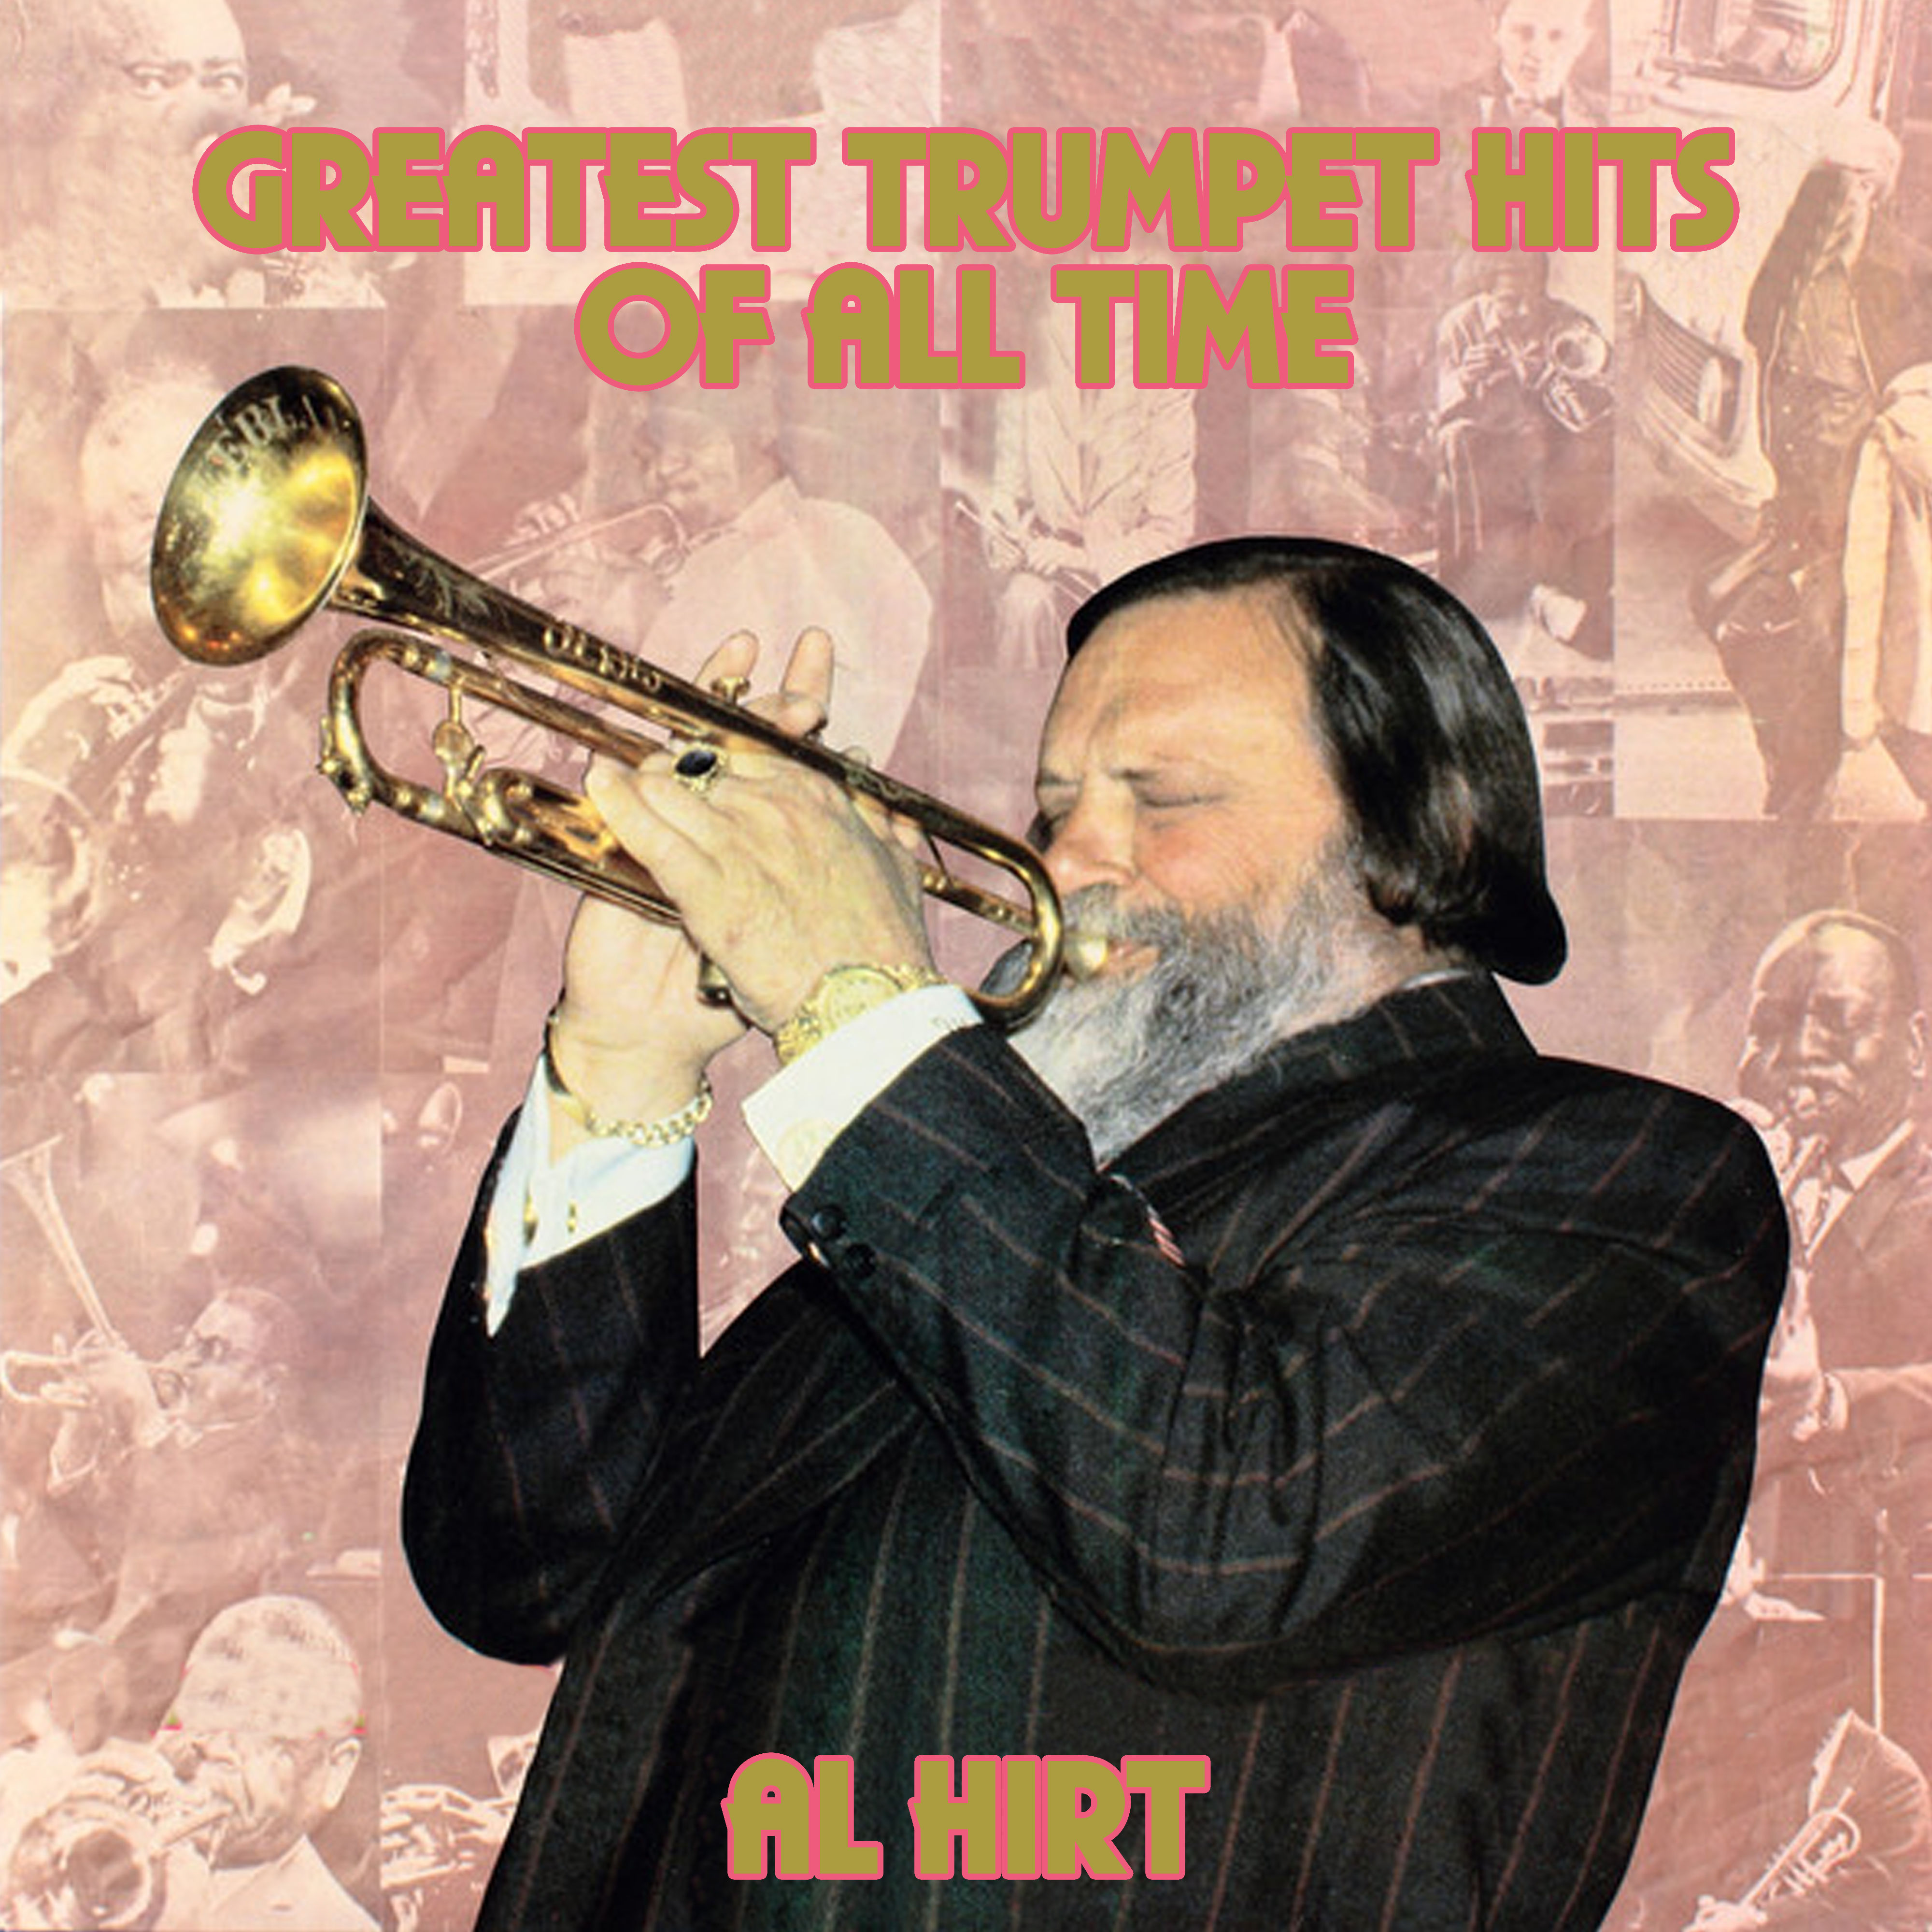 Al Hirt – Greatest Trumpet Hits of All Time (1979/2015) [FLAC 24bit/96kHz]